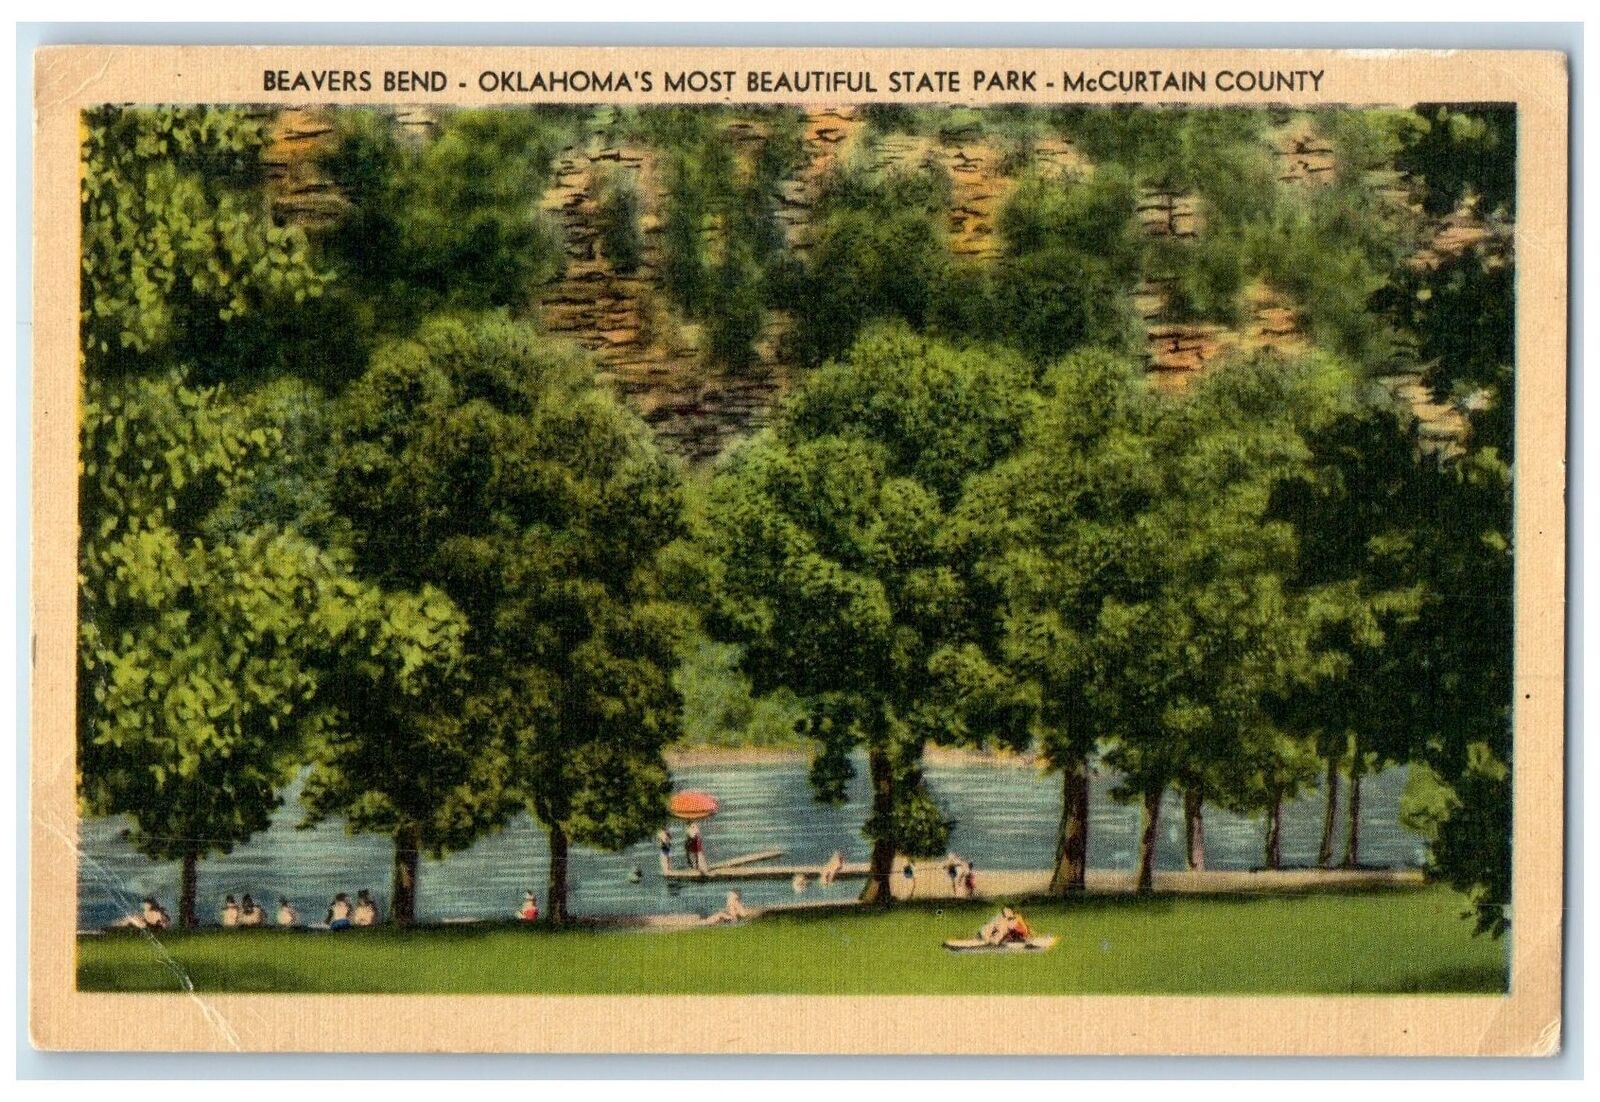 1954 Beavers Bend Oklahoma's Beautiful State Park McCurtain County OK Postcard